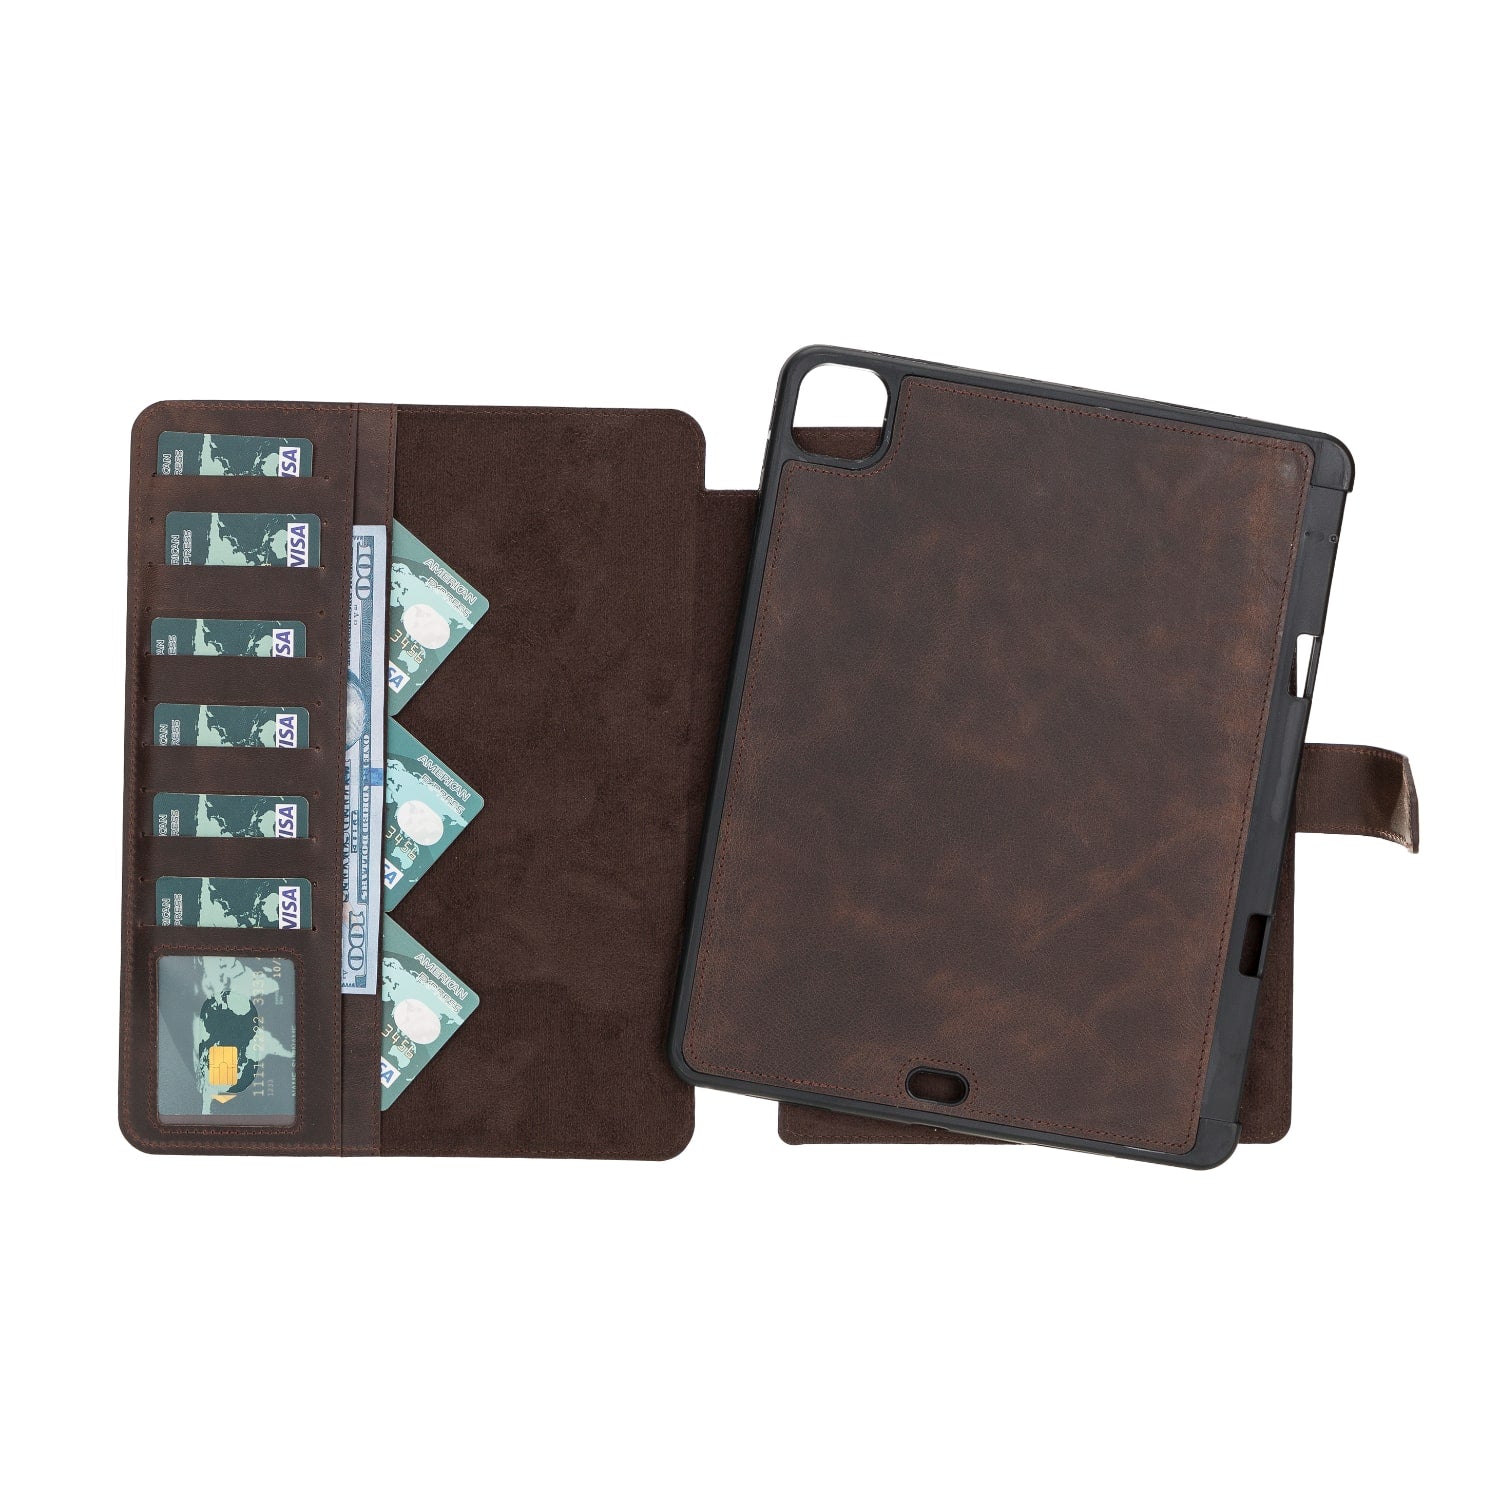 Tan Brown Leather iPad Air 10.9 Inc Smart Folio Case with Apple Pen Holder - Bomonti - 1